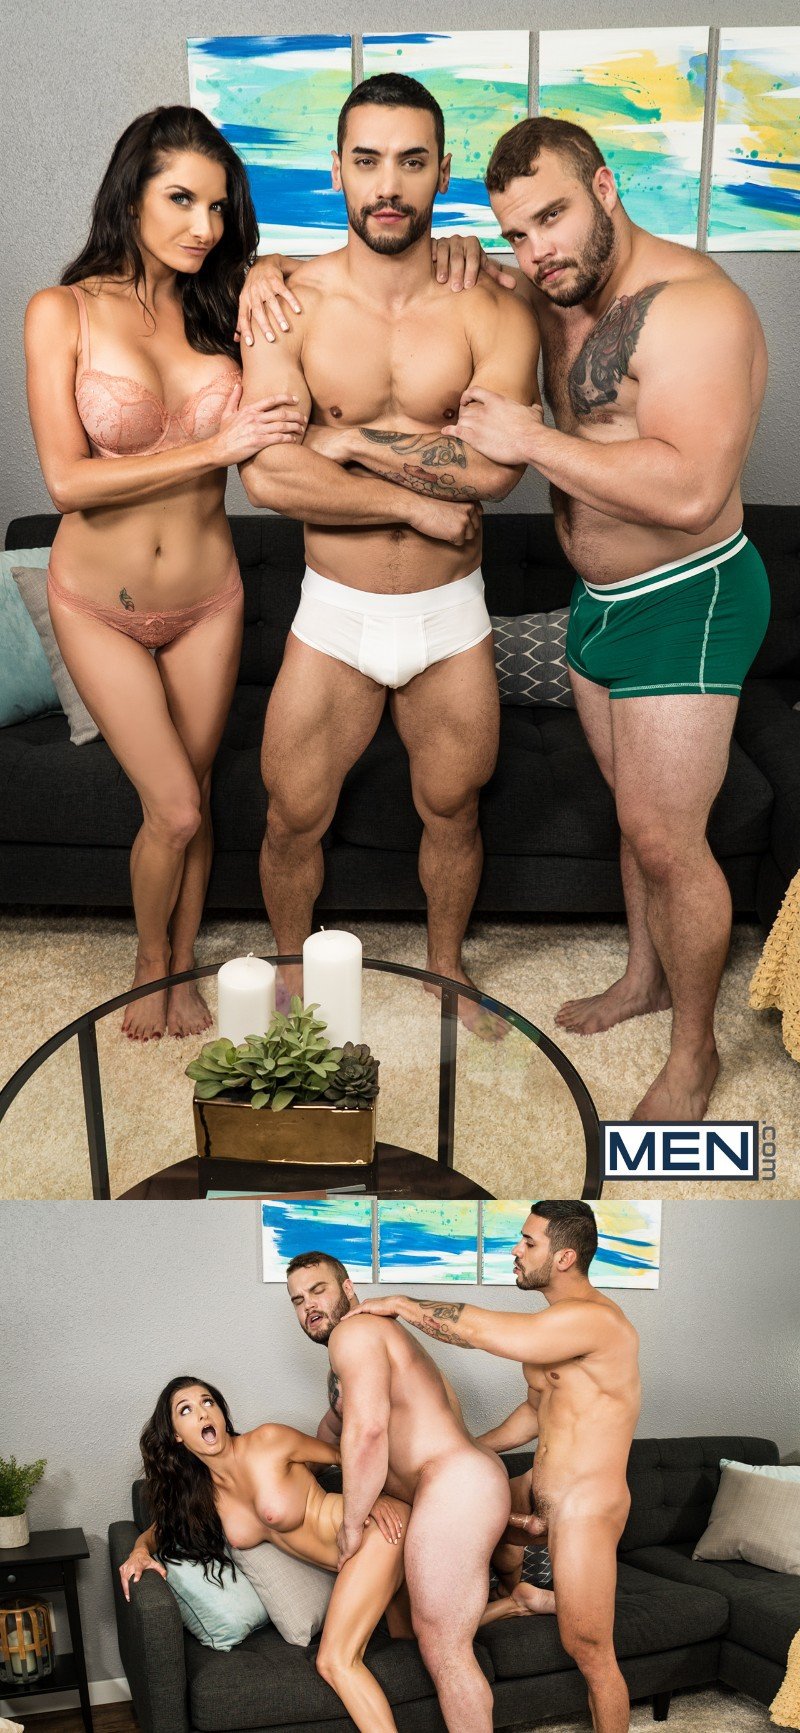 Men Com Gay Porn - MEN.com Releases Its First Bisexual Scene & Members Hate It ...